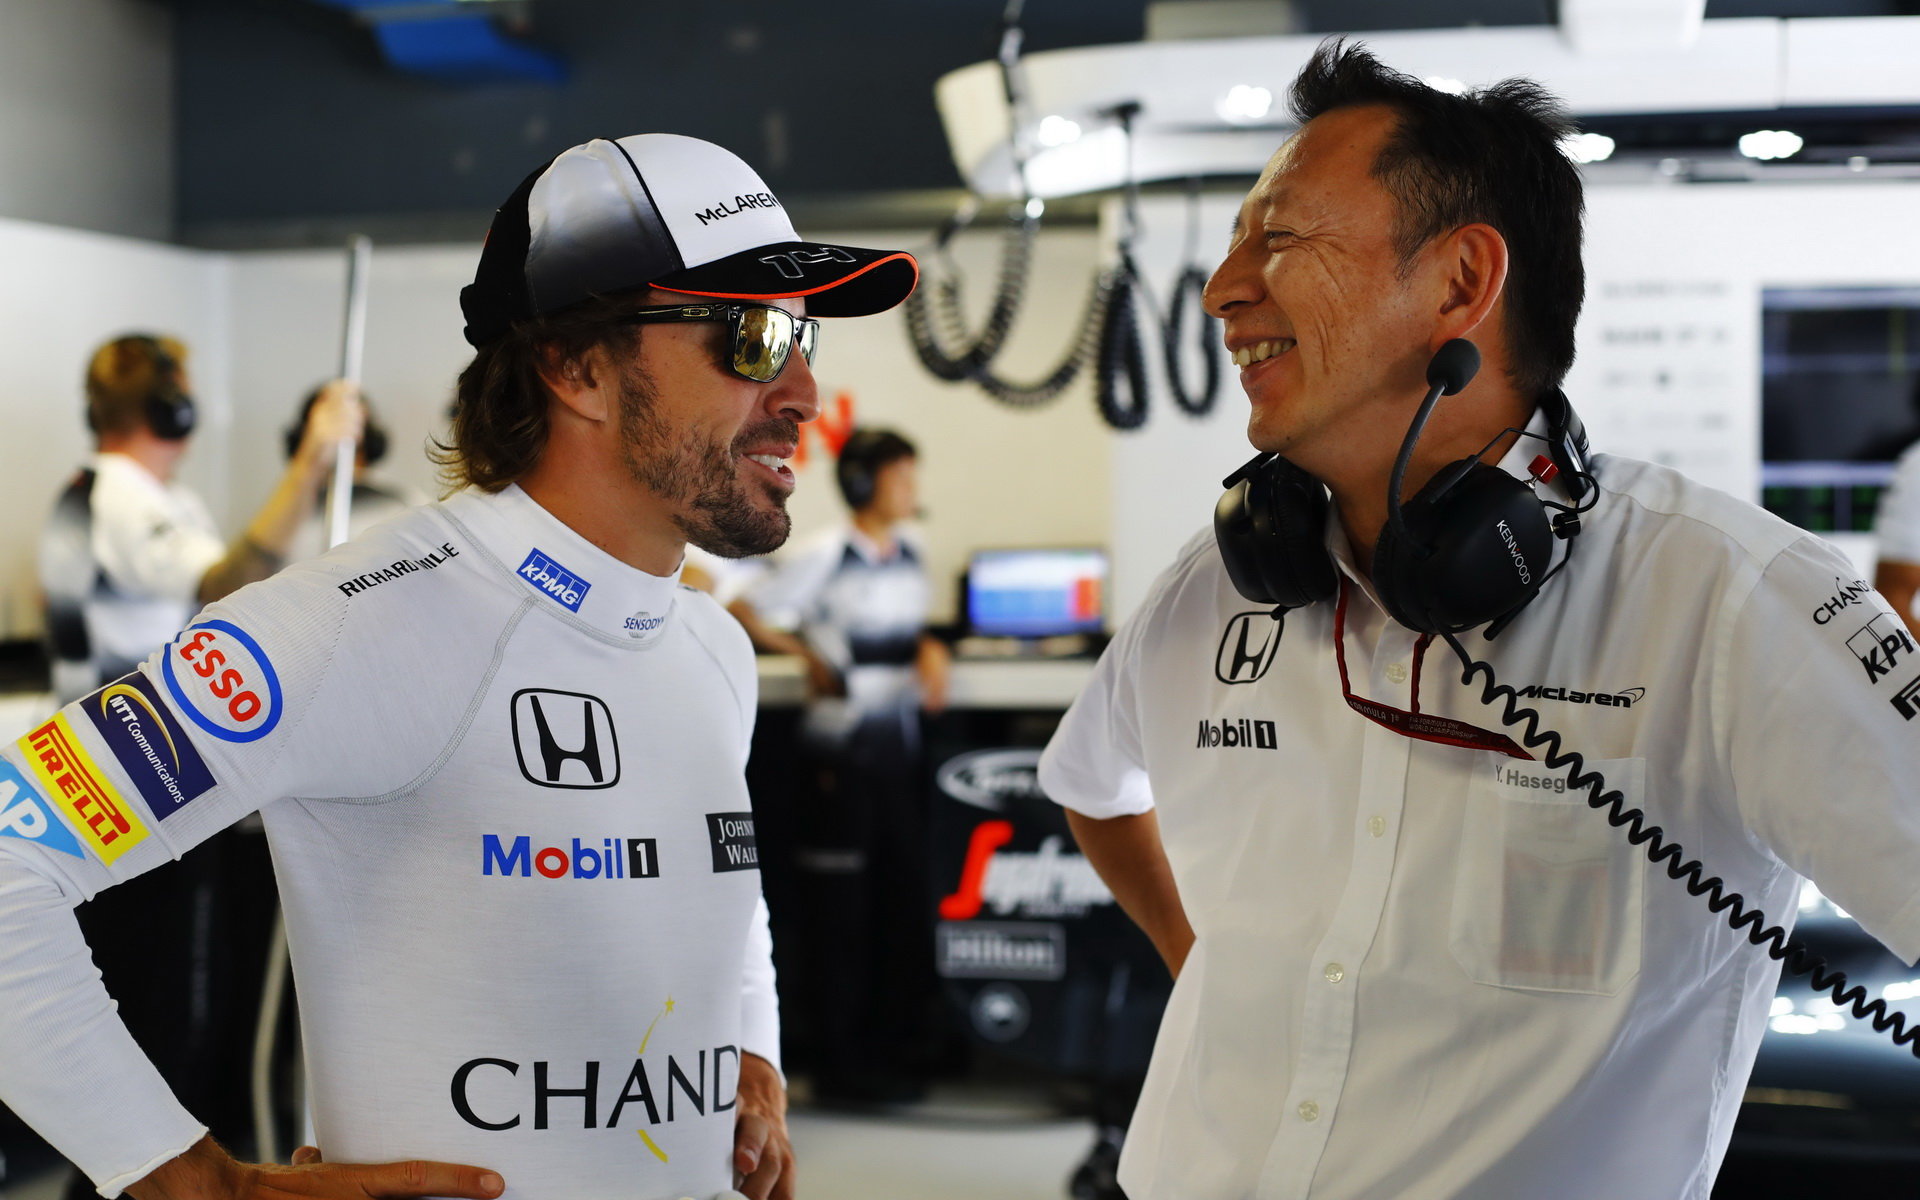 Fernando Alonso a Jusuke Hasegawa v Monze